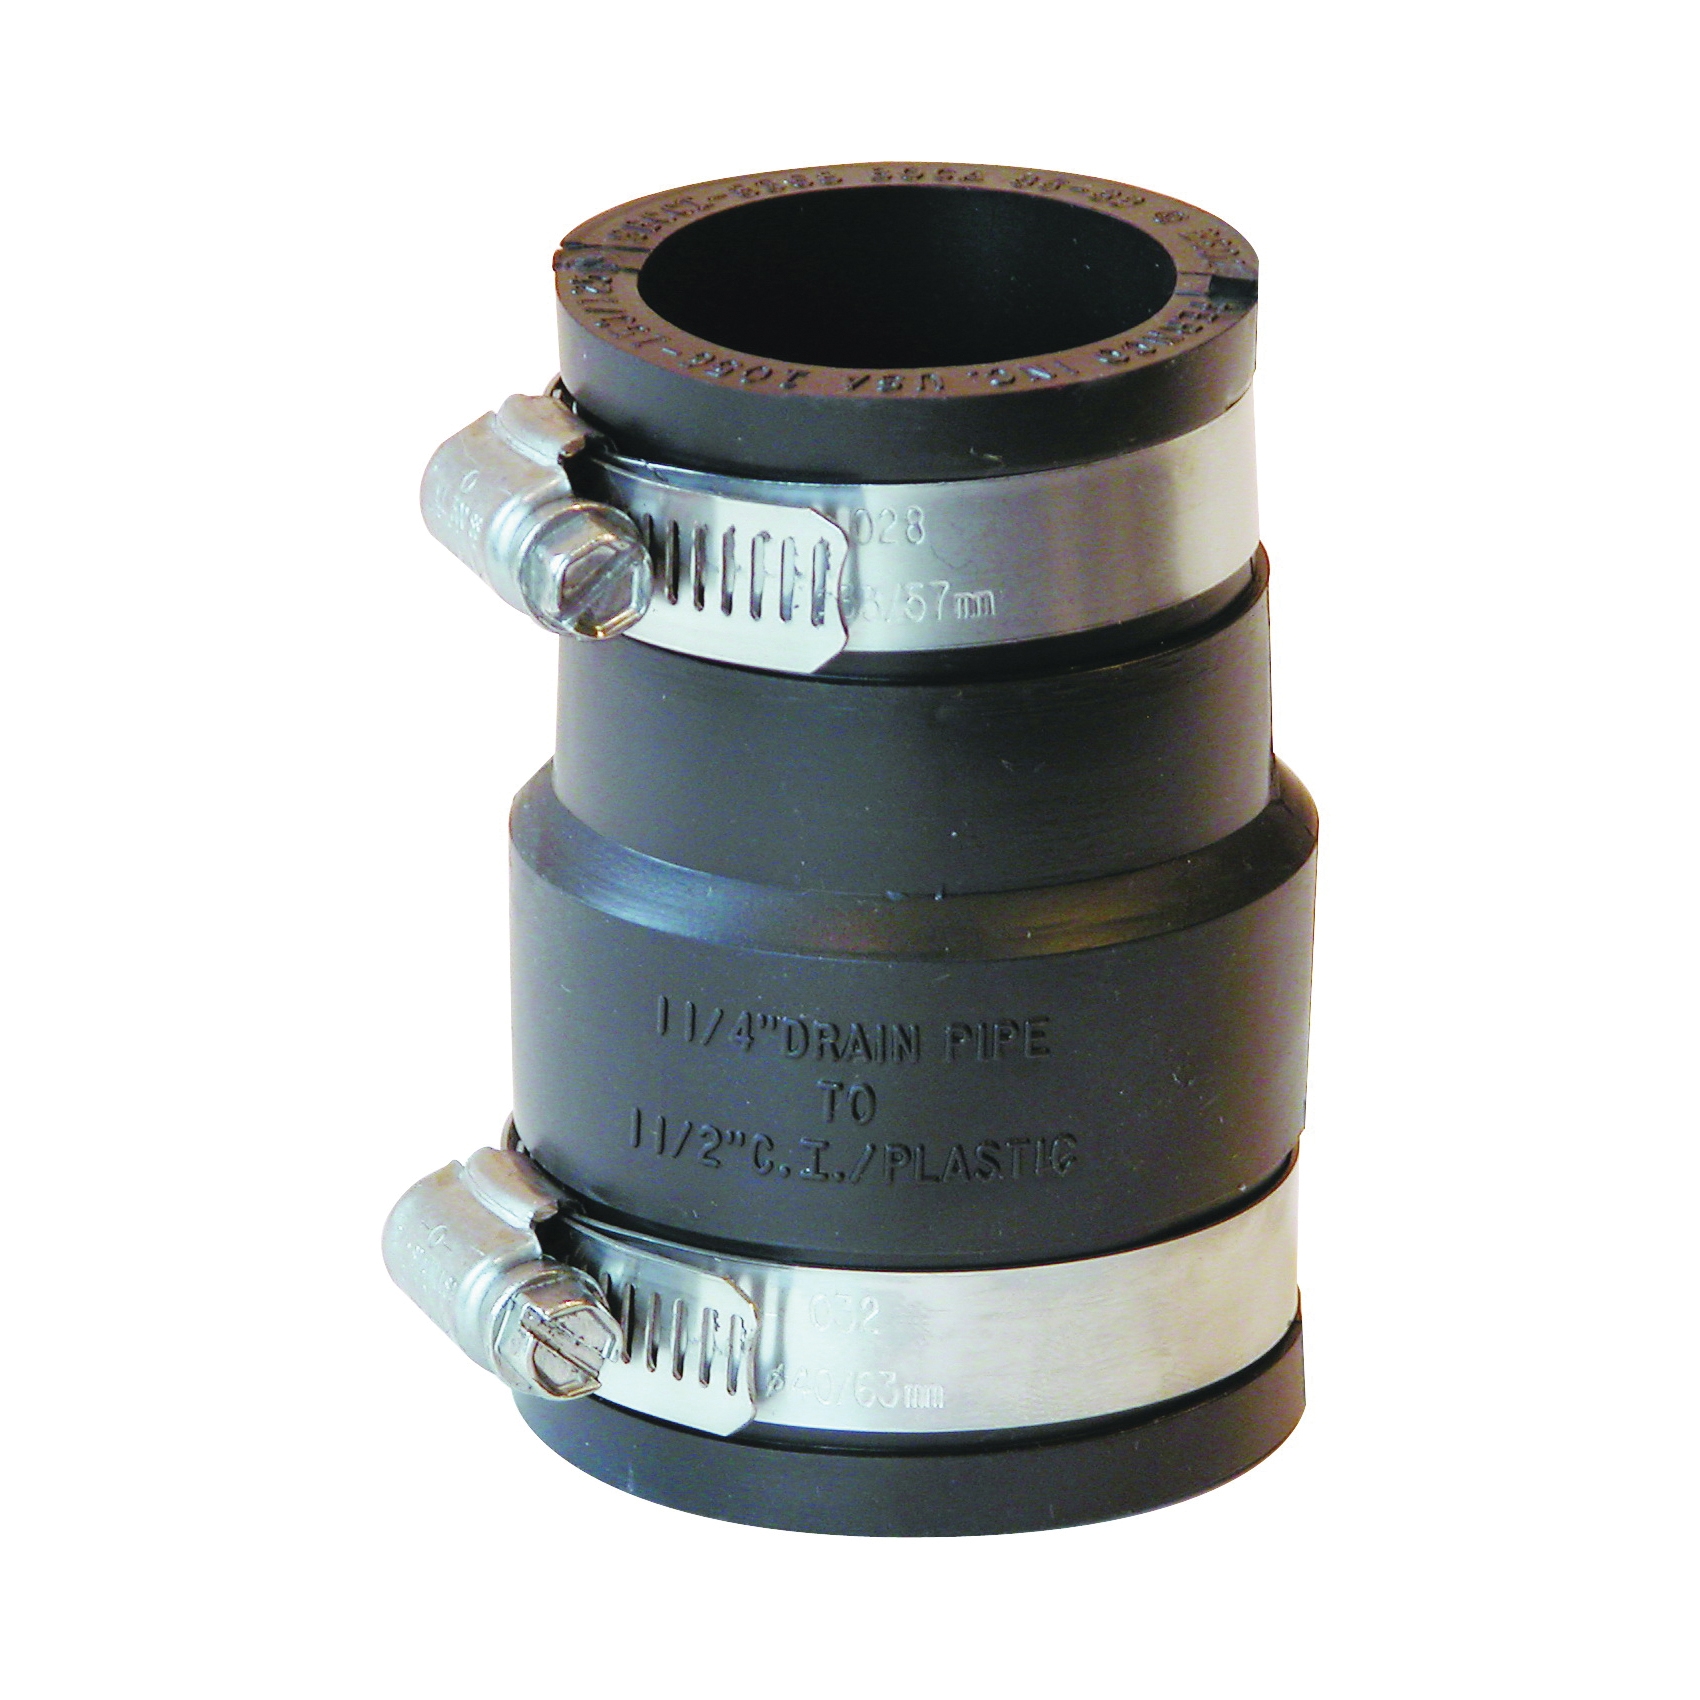 FERNCO P1056-150/125 Flexible Coupling, 1-1/2 x 1-1/4 in, PVC, Black, 4.3 psi Pressure - 1